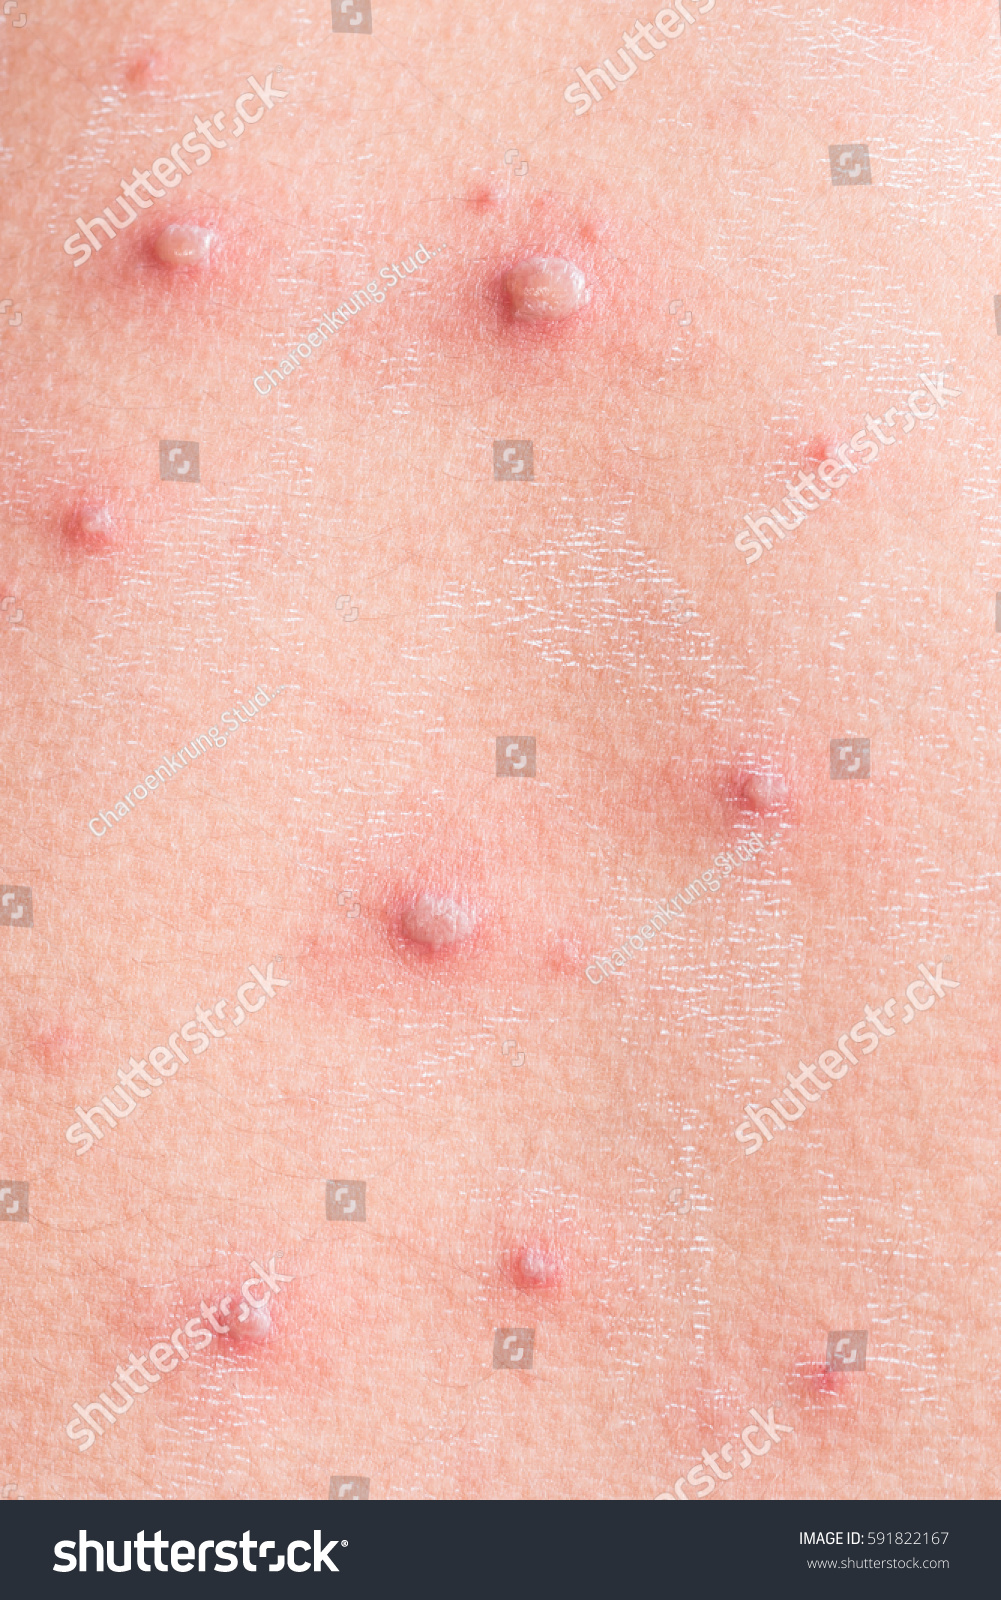 Chicken Pox Rash Viral Infections Chickenpox Stock Photo Edit Now